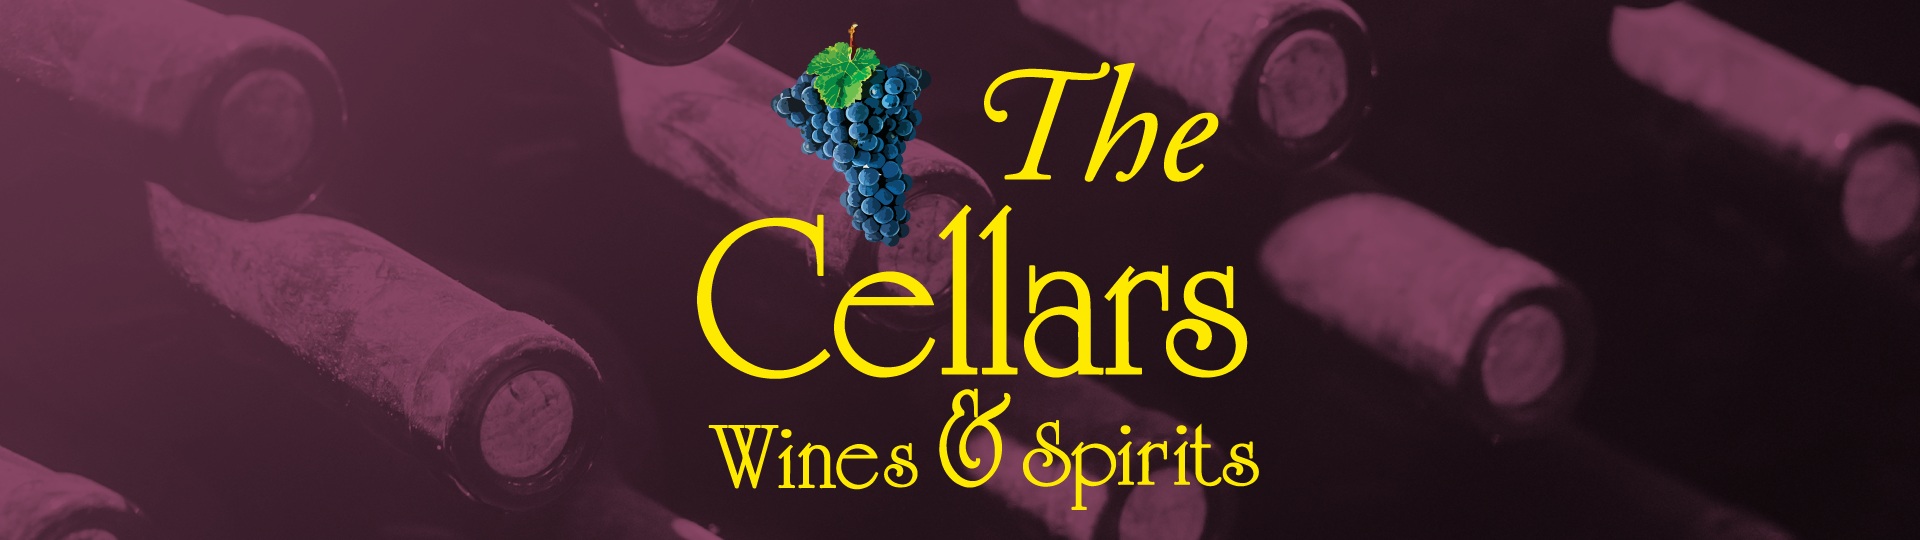 The Cellars Wine & Spirits